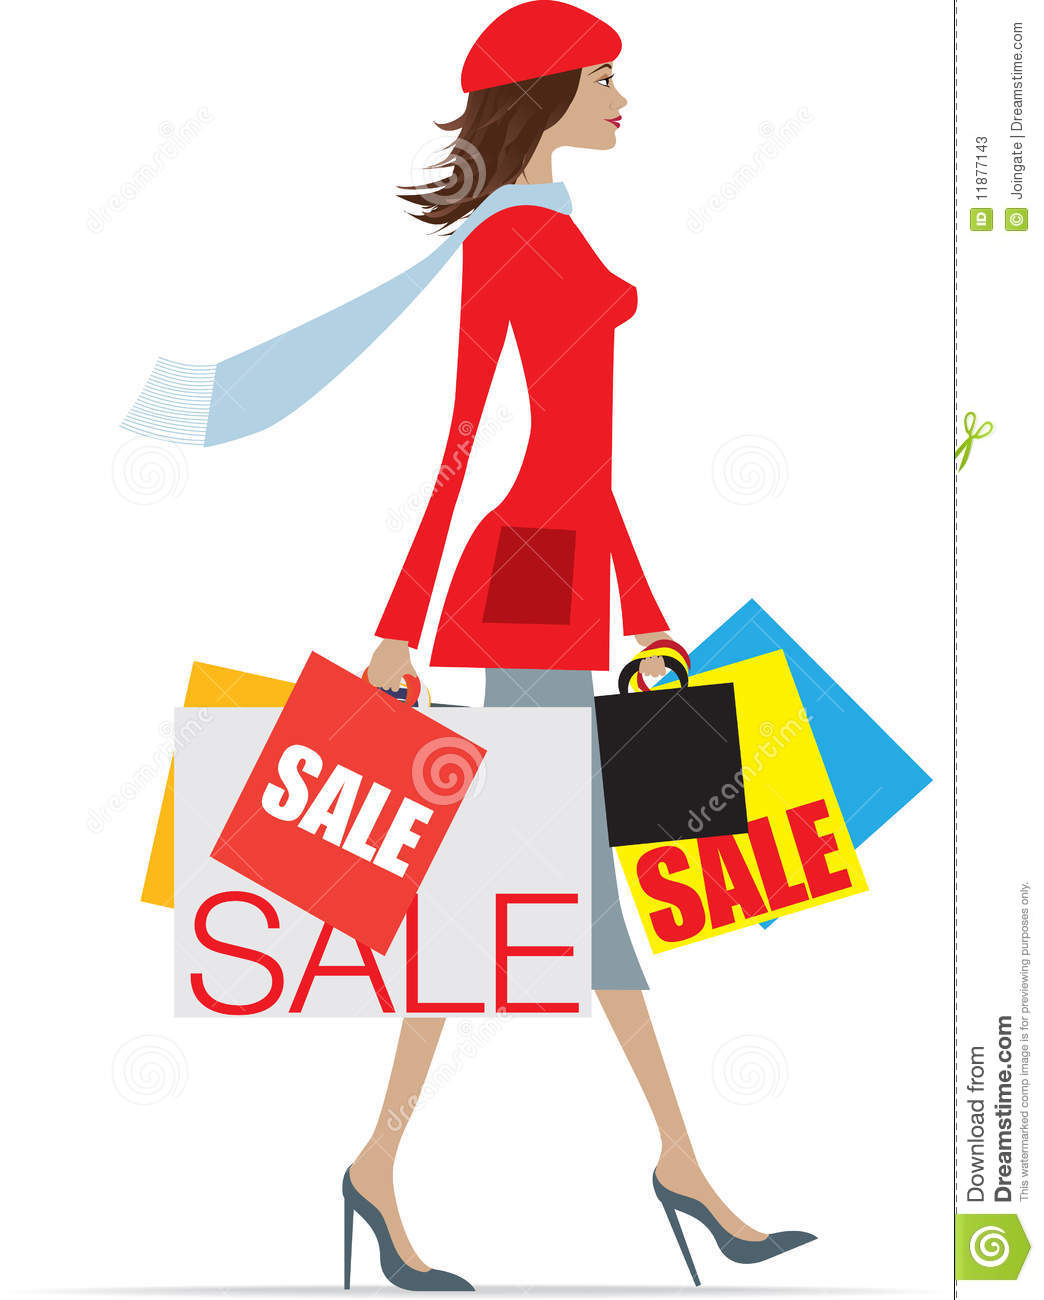 Sales Shopping Woman Stock Photos   Image  11877143